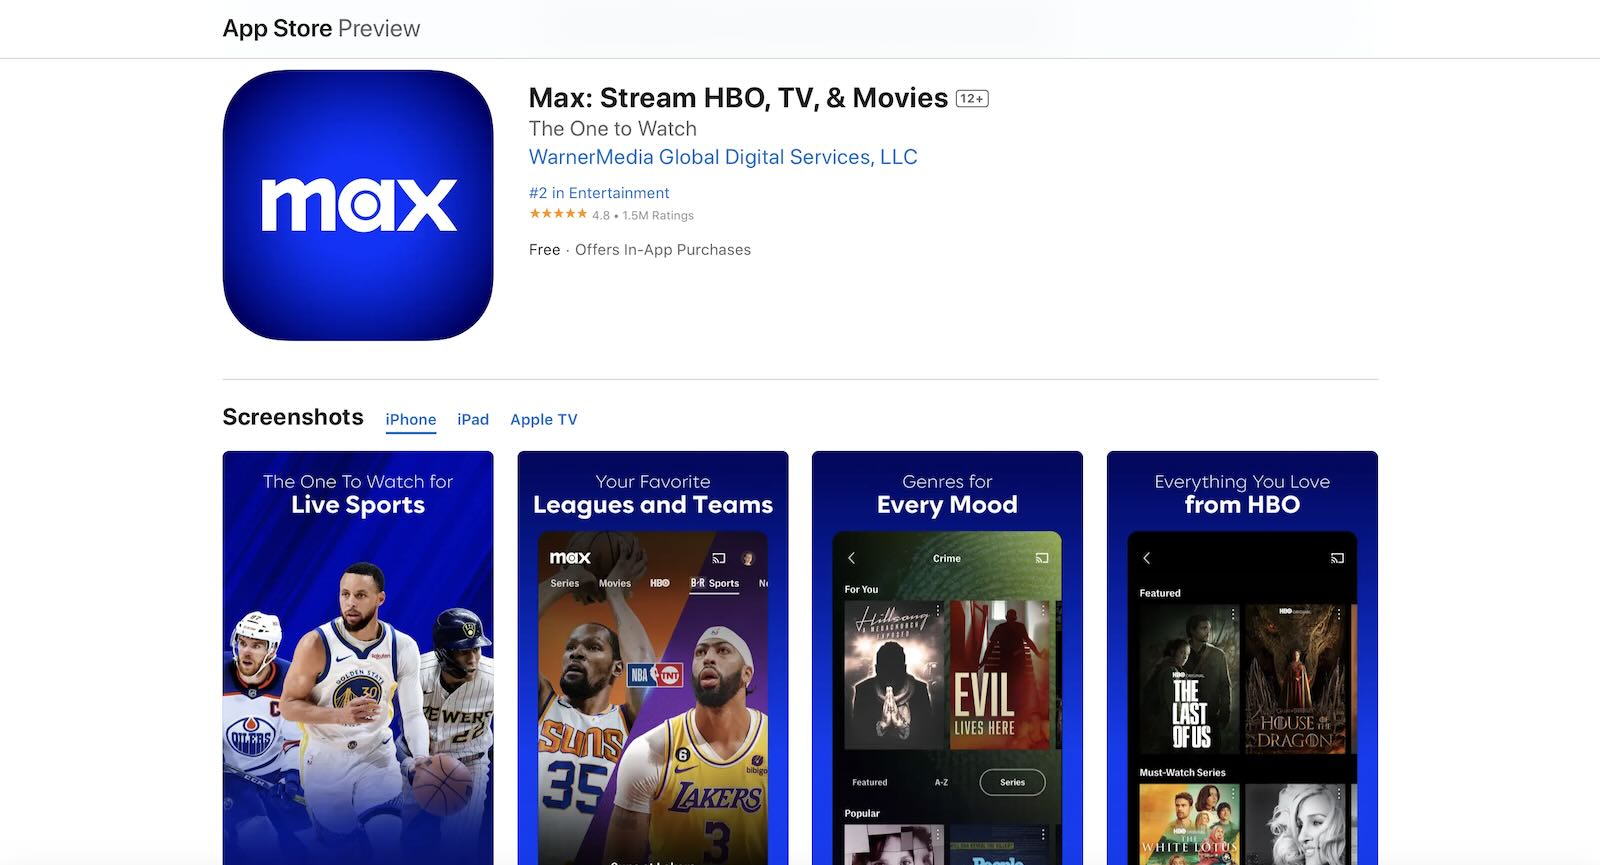 Max: Stream HBO, TV & Movies app screenshot